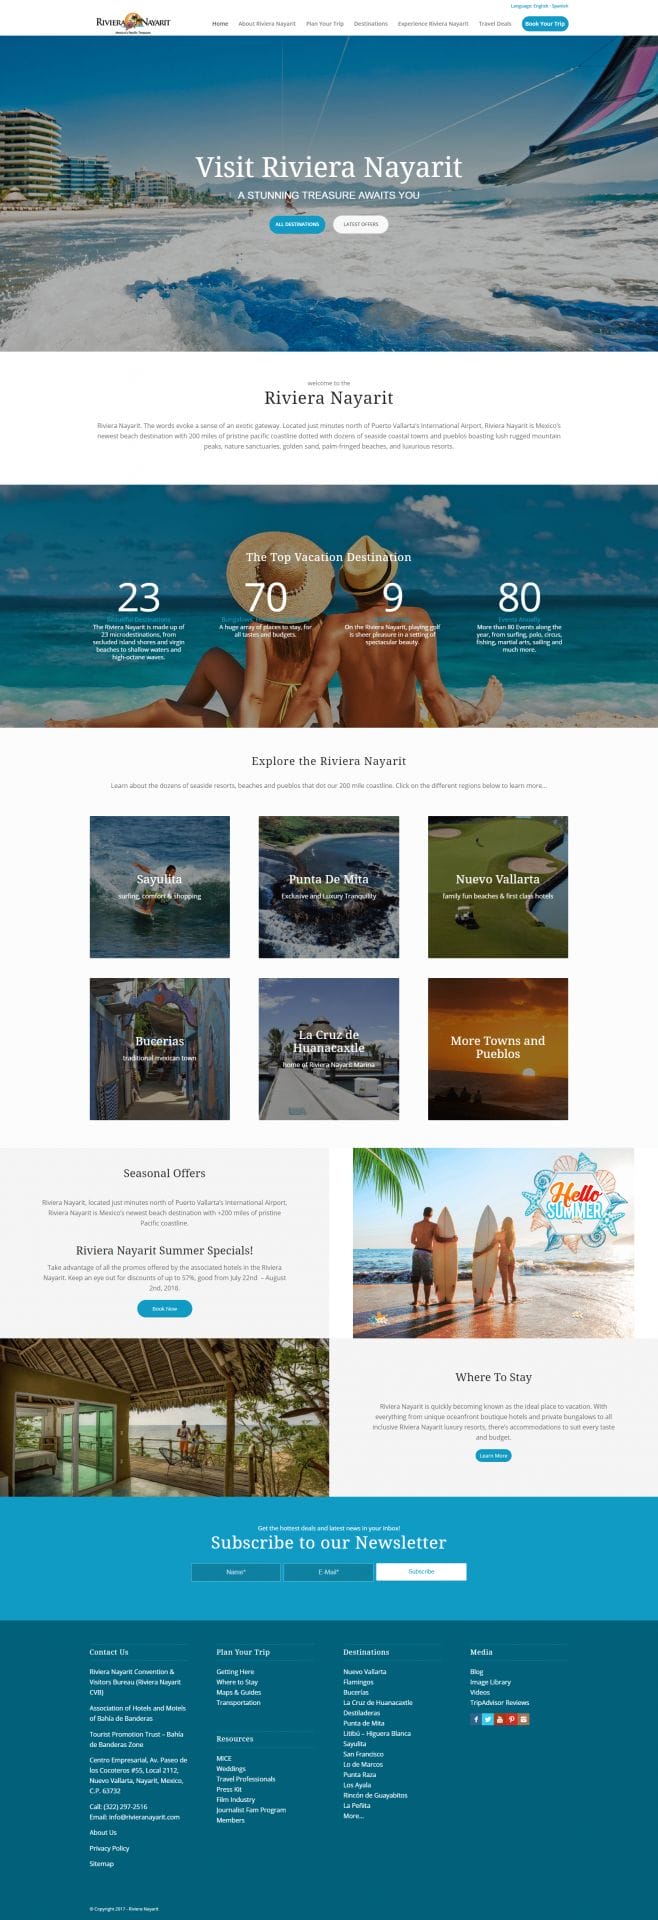 Riviera Nayarit website home page layout